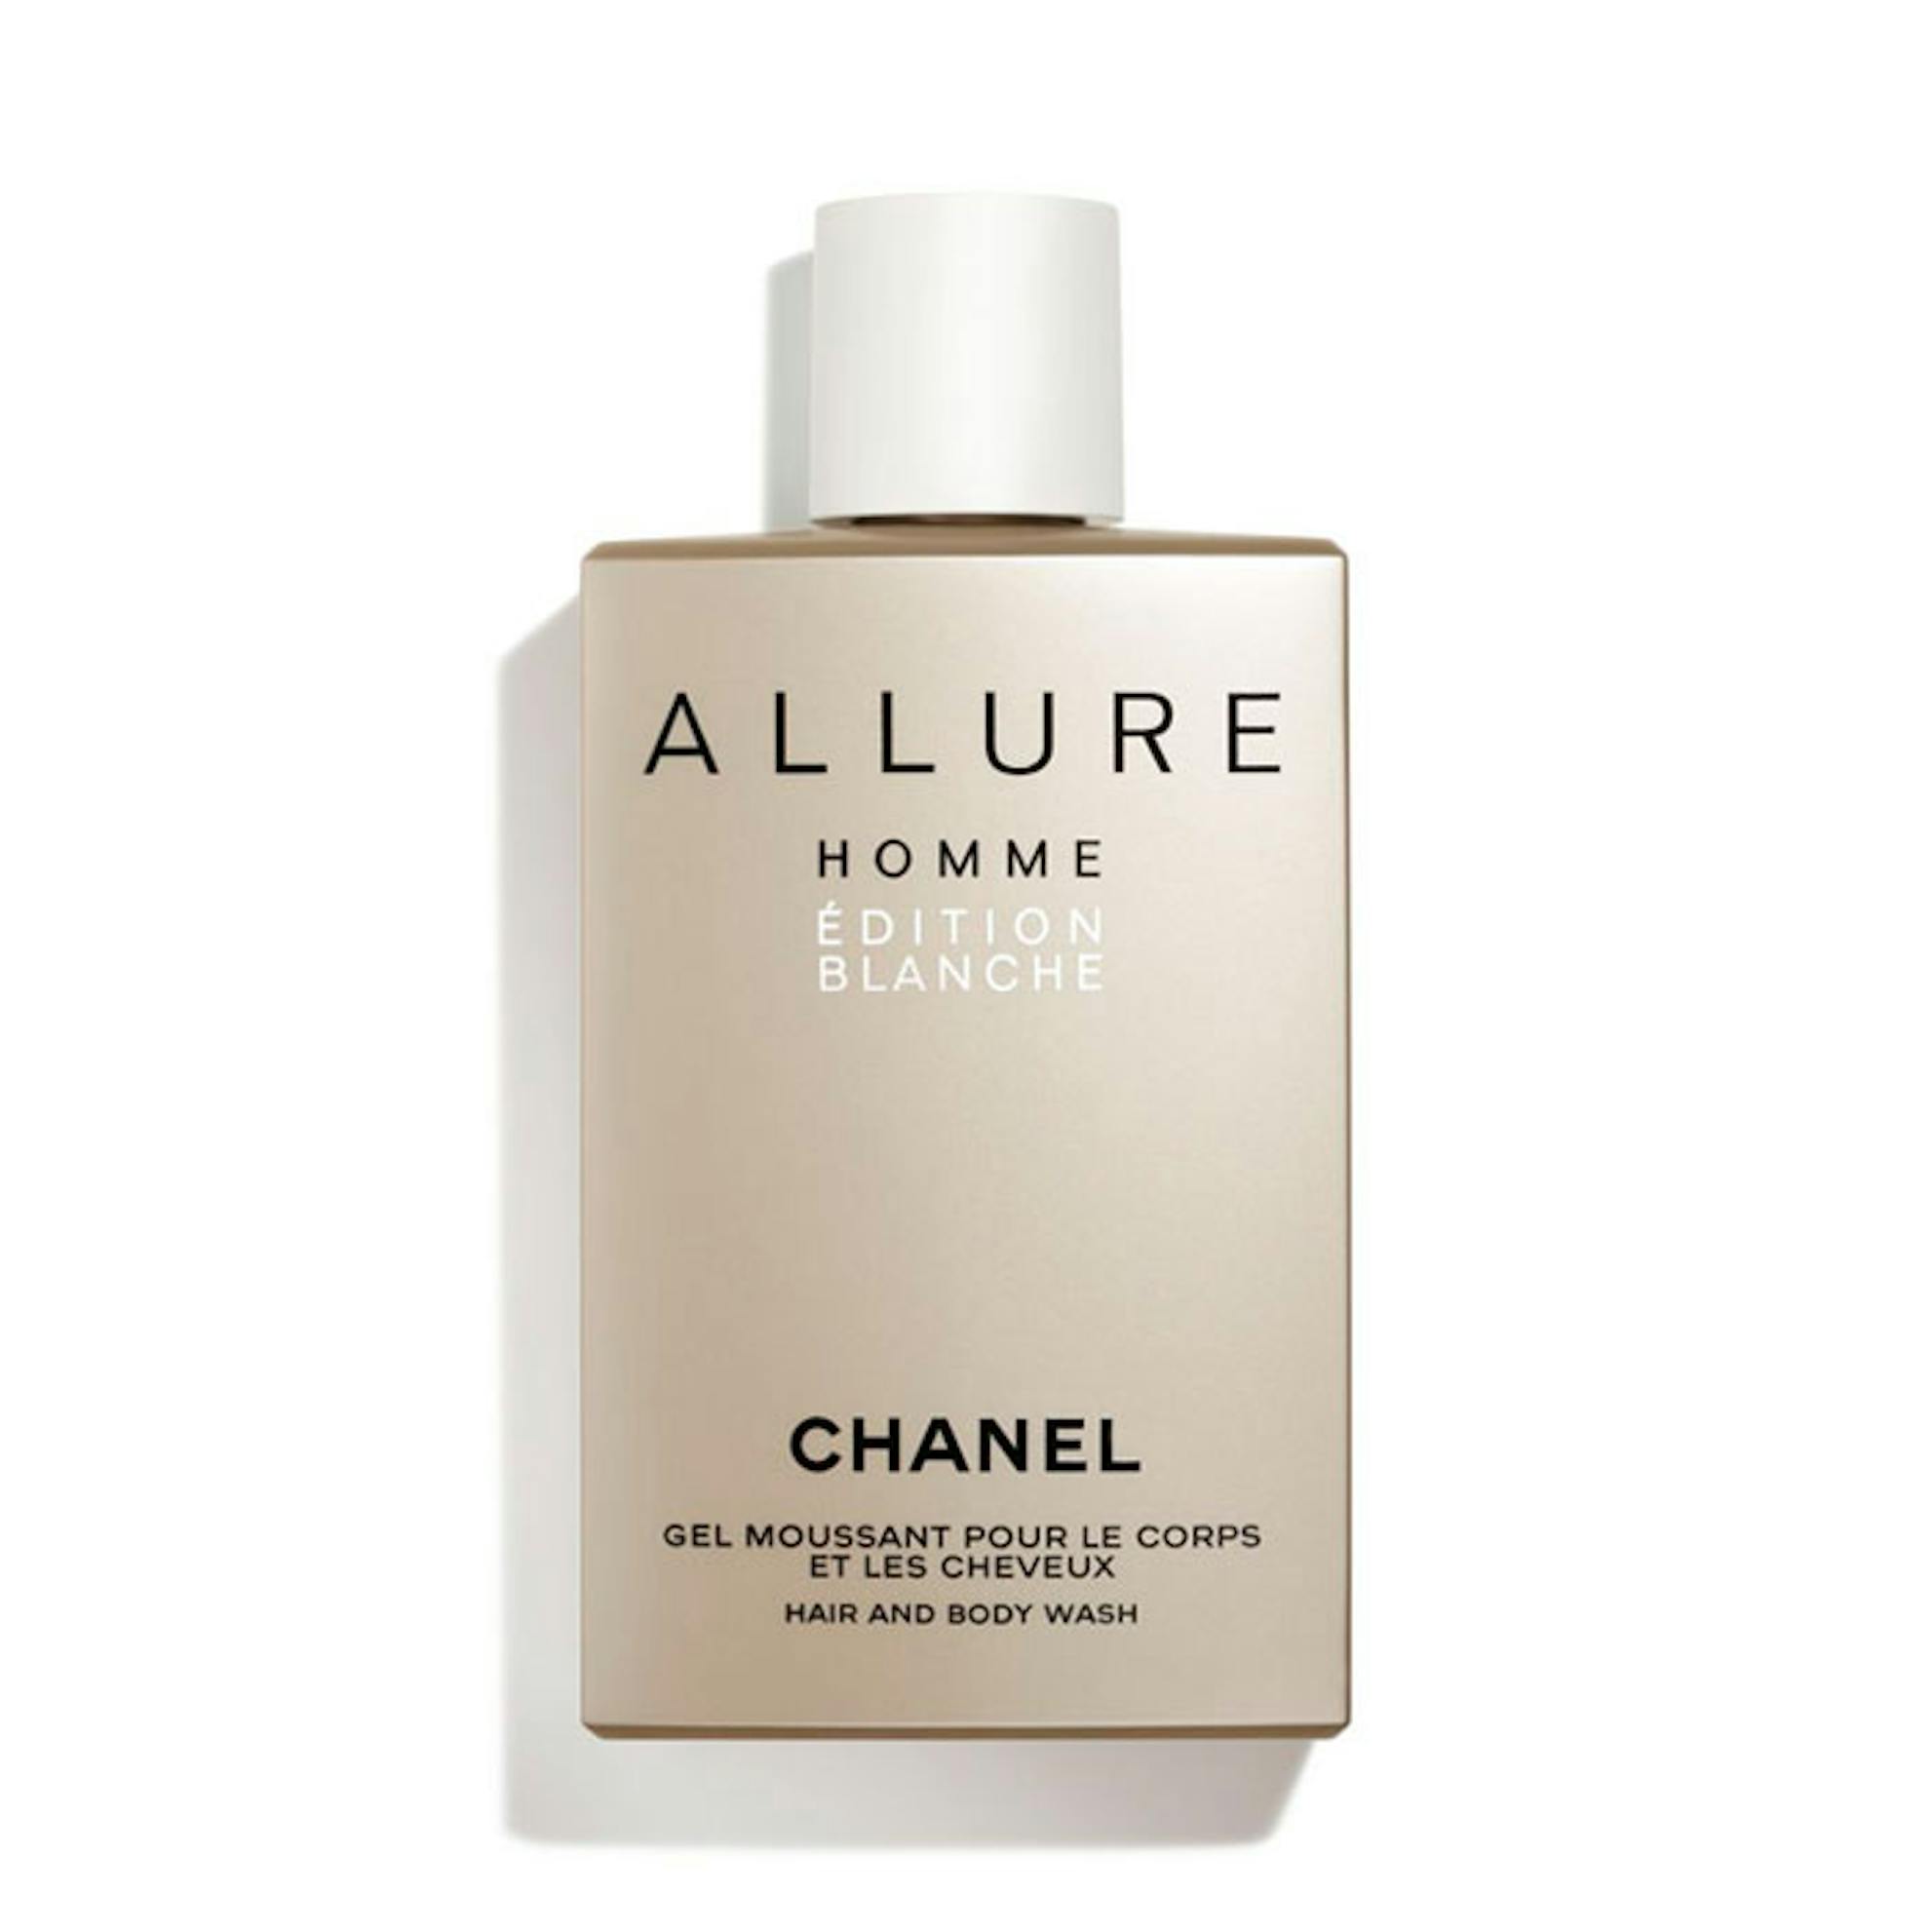 Chanel homme edition. Chanel Allure homme Edition Blanche. Парфюм Allure homme Edition Blanche Chanel. Аллюр хом спорт Бланш Шанель. Шанель Аллюр Бланш мужские.